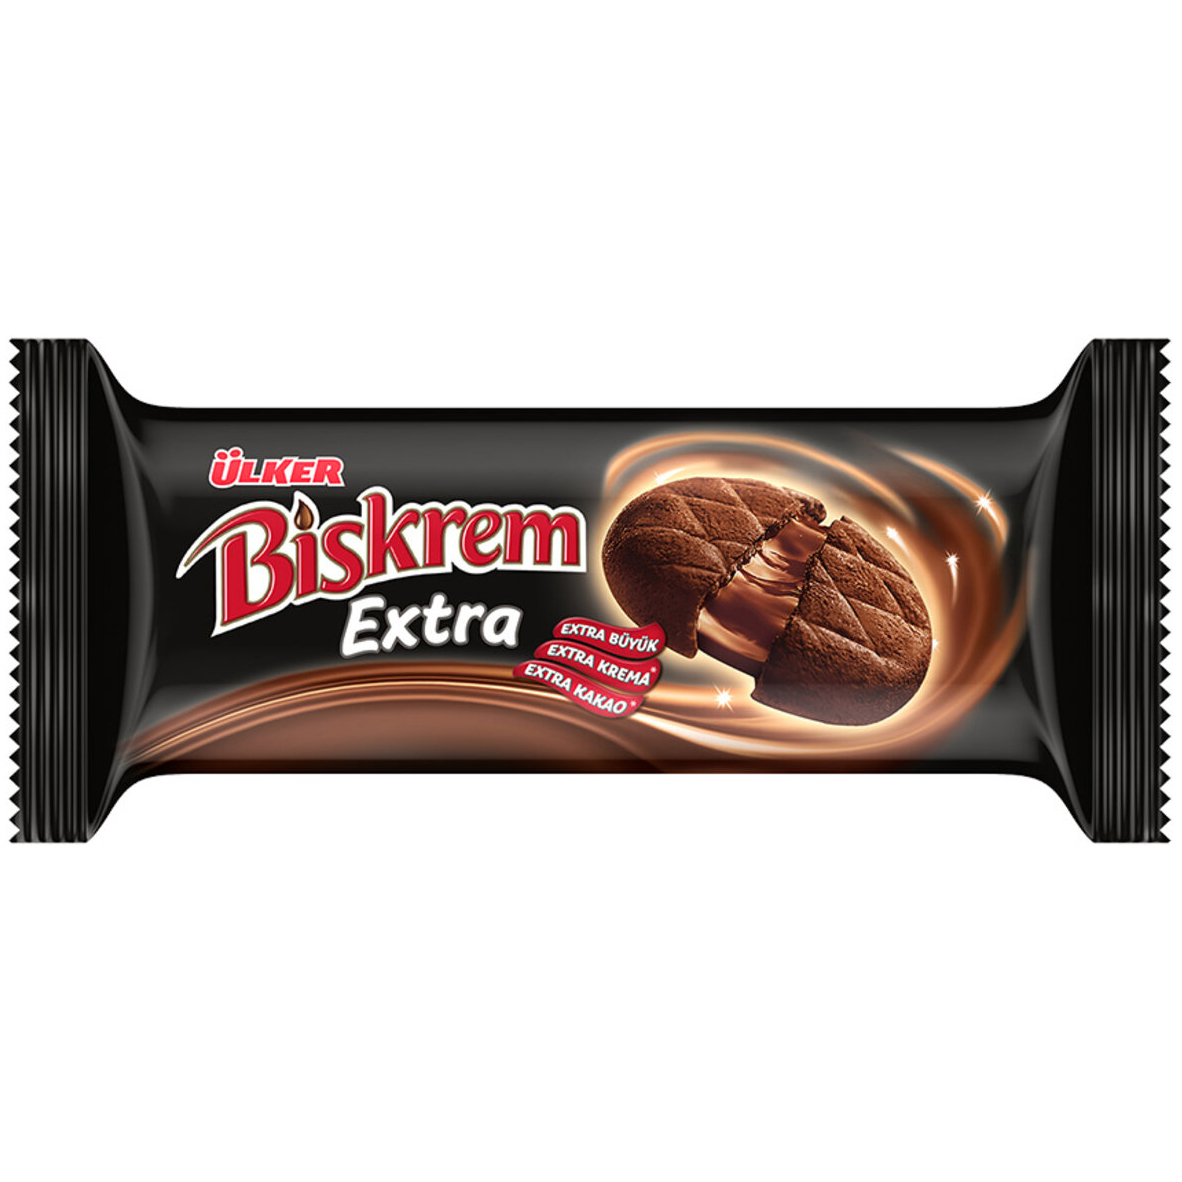 Печенье Ulker Biskrem Extra, 184 г цена и фото